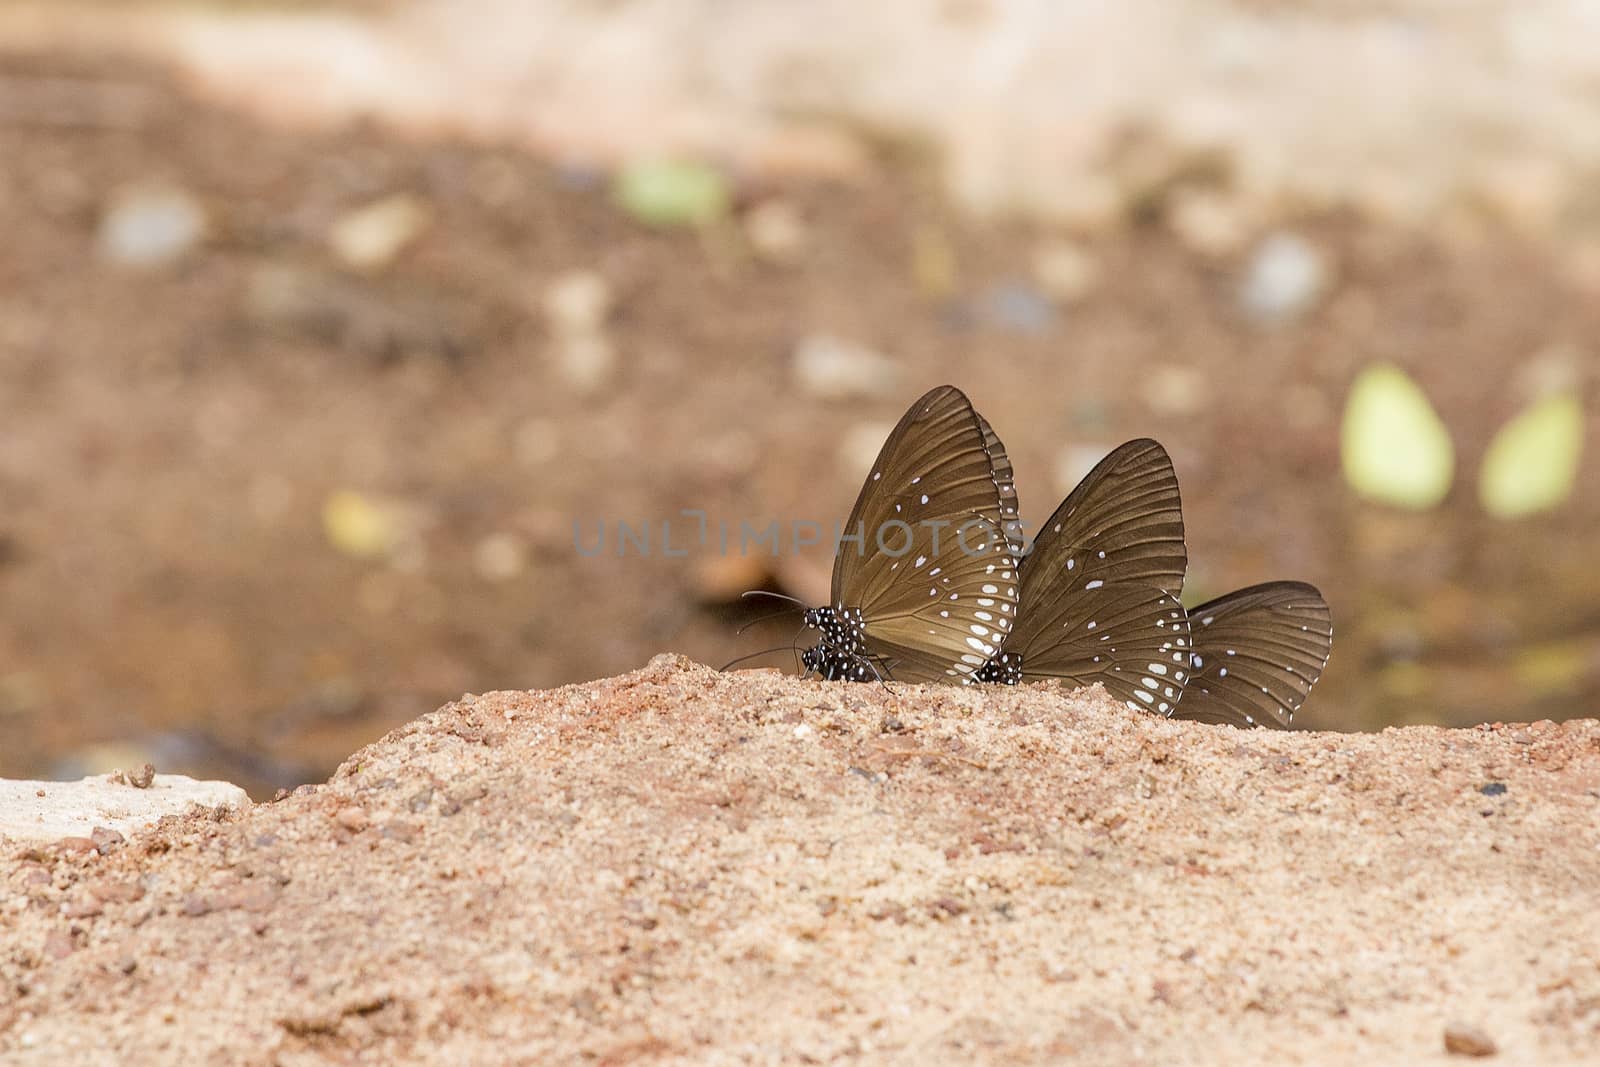  A pretty butterfly on a sandy soil background